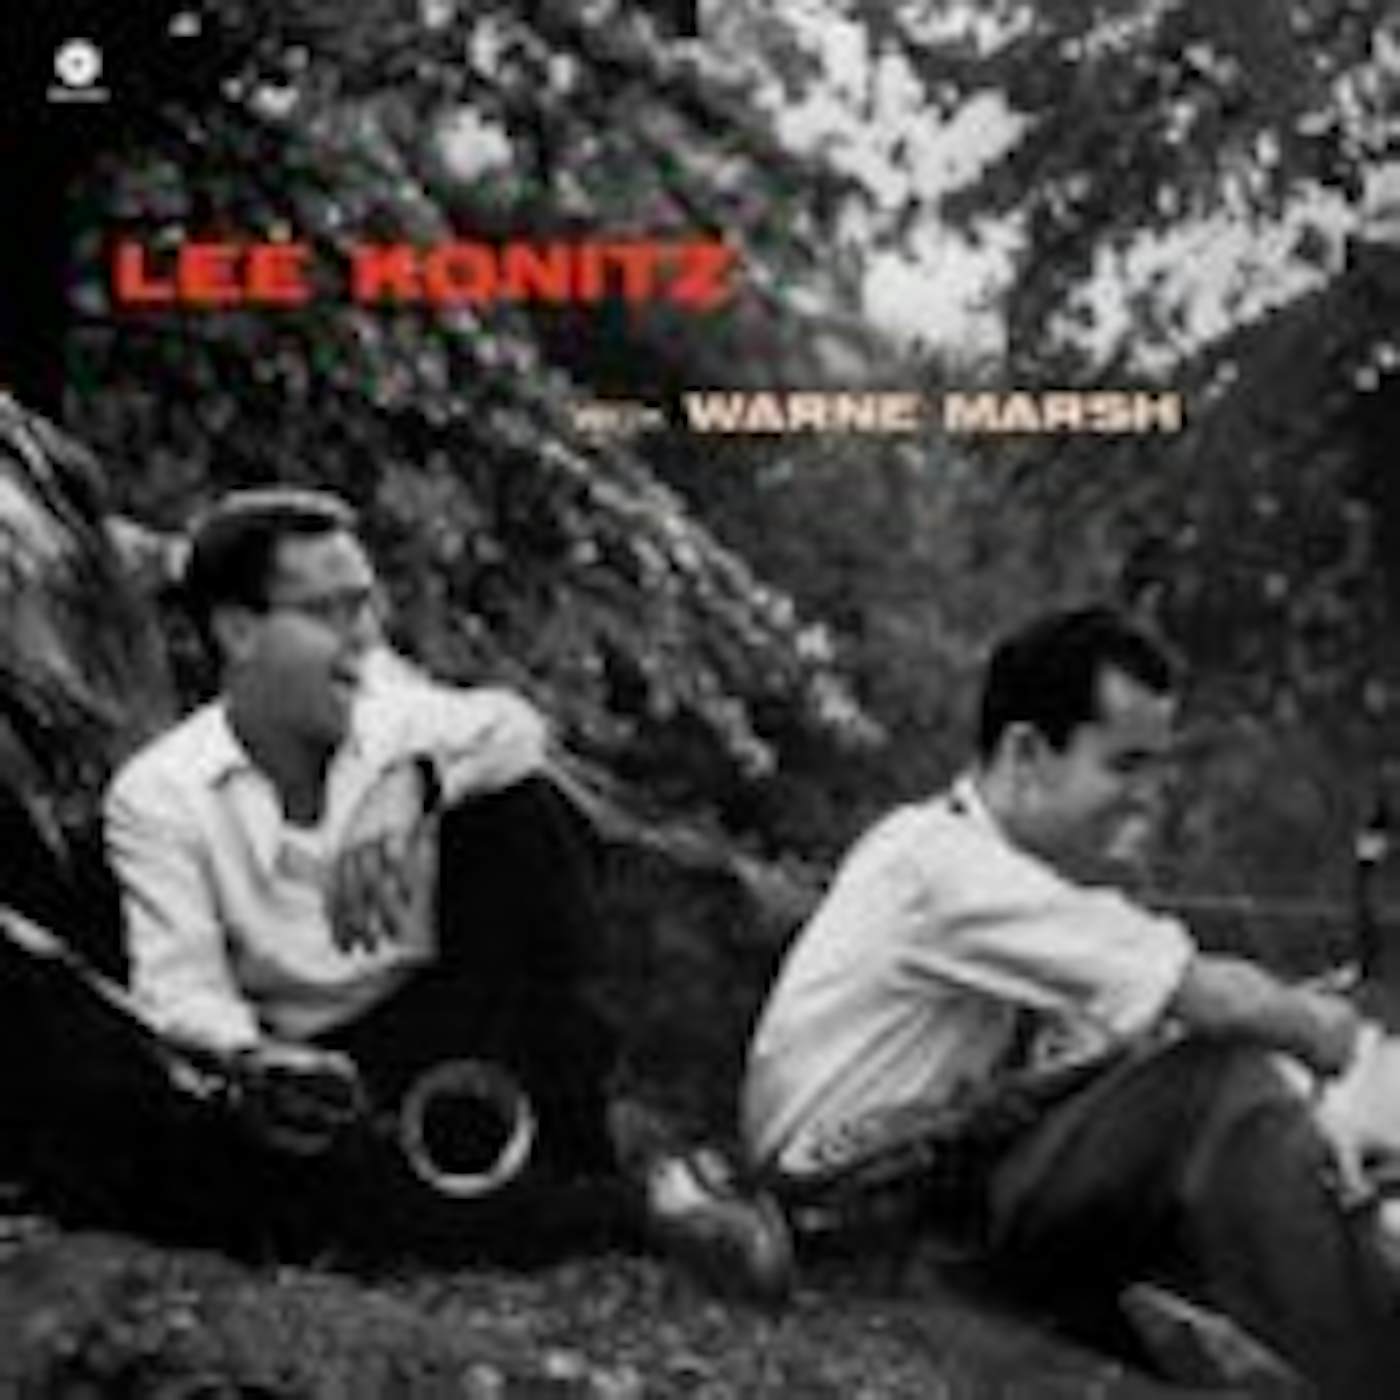 Lee Konitz WITH WARNE MARSH Vinyl Record